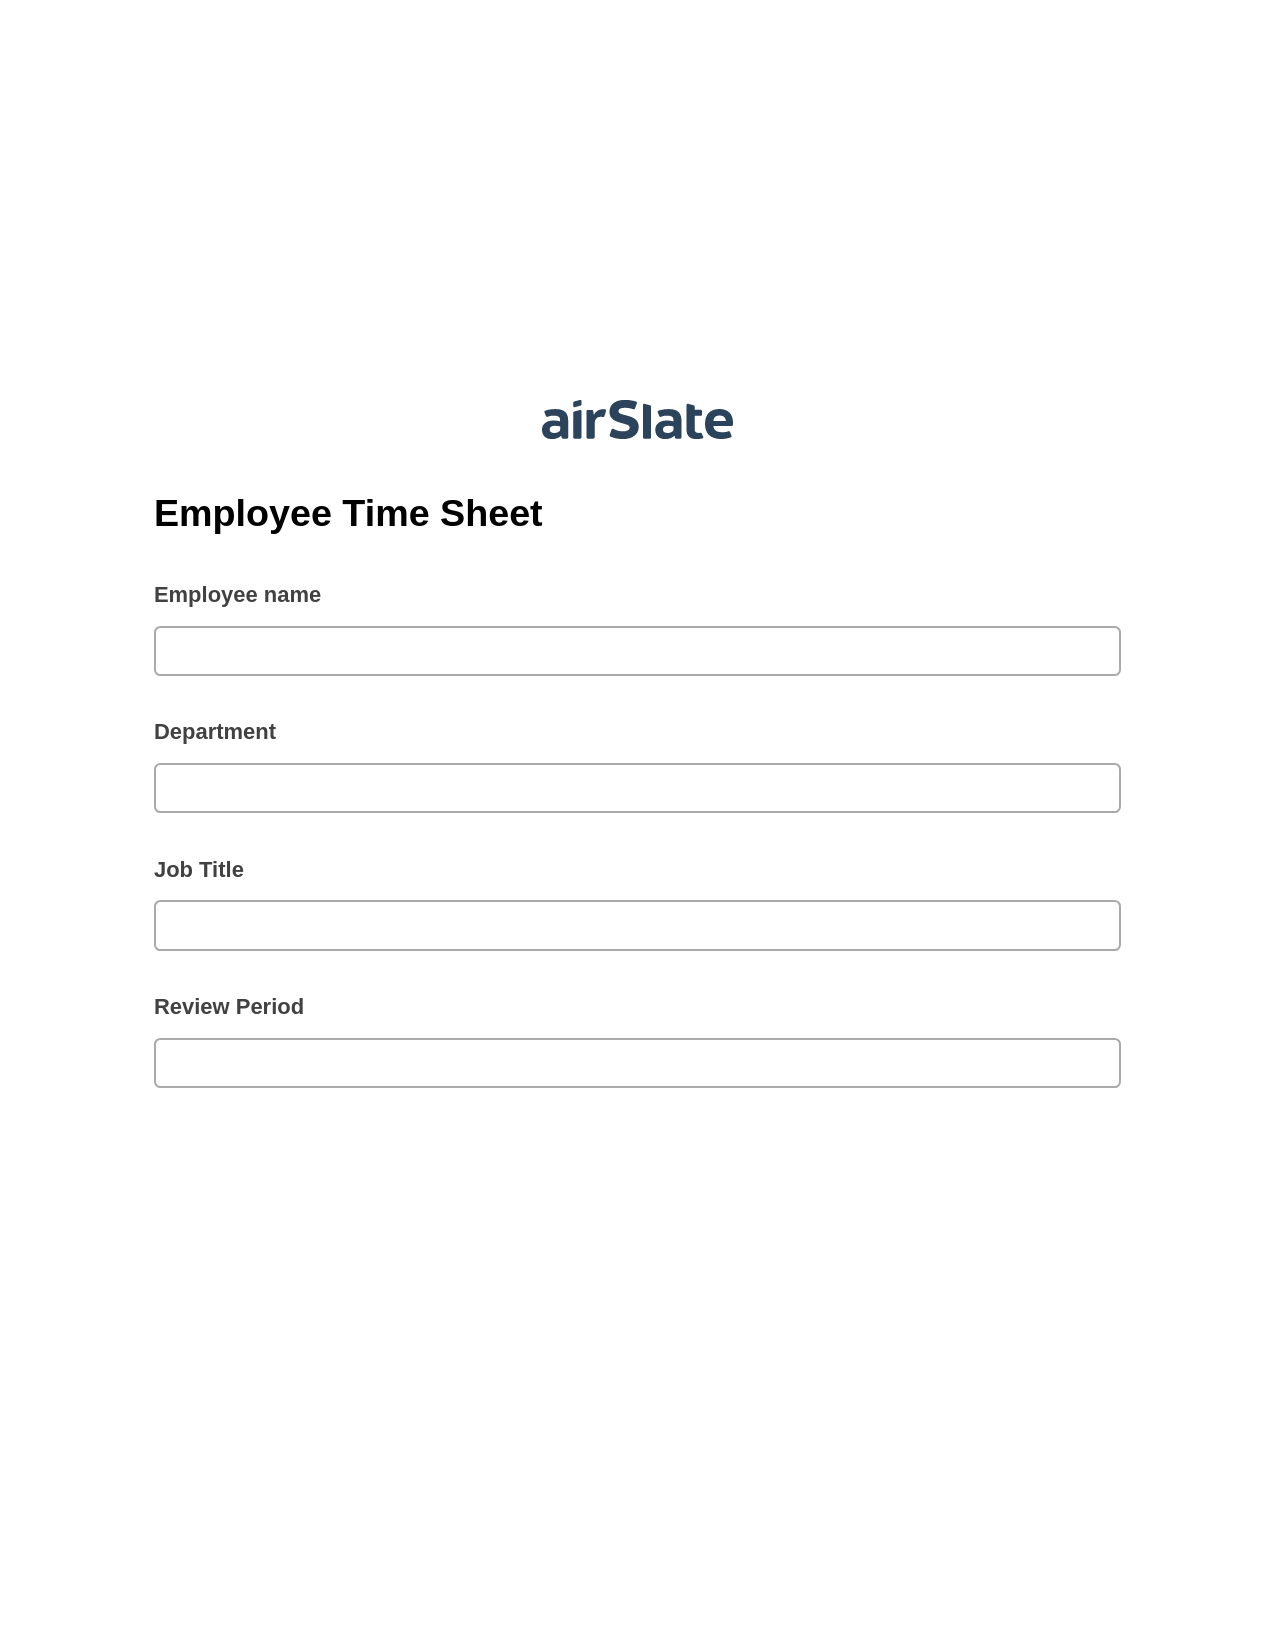 Multirole Employee Time Sheet Prefill from NetSuite records, Create Salesforce Records Bot, Slack Notification Postfinish Bot